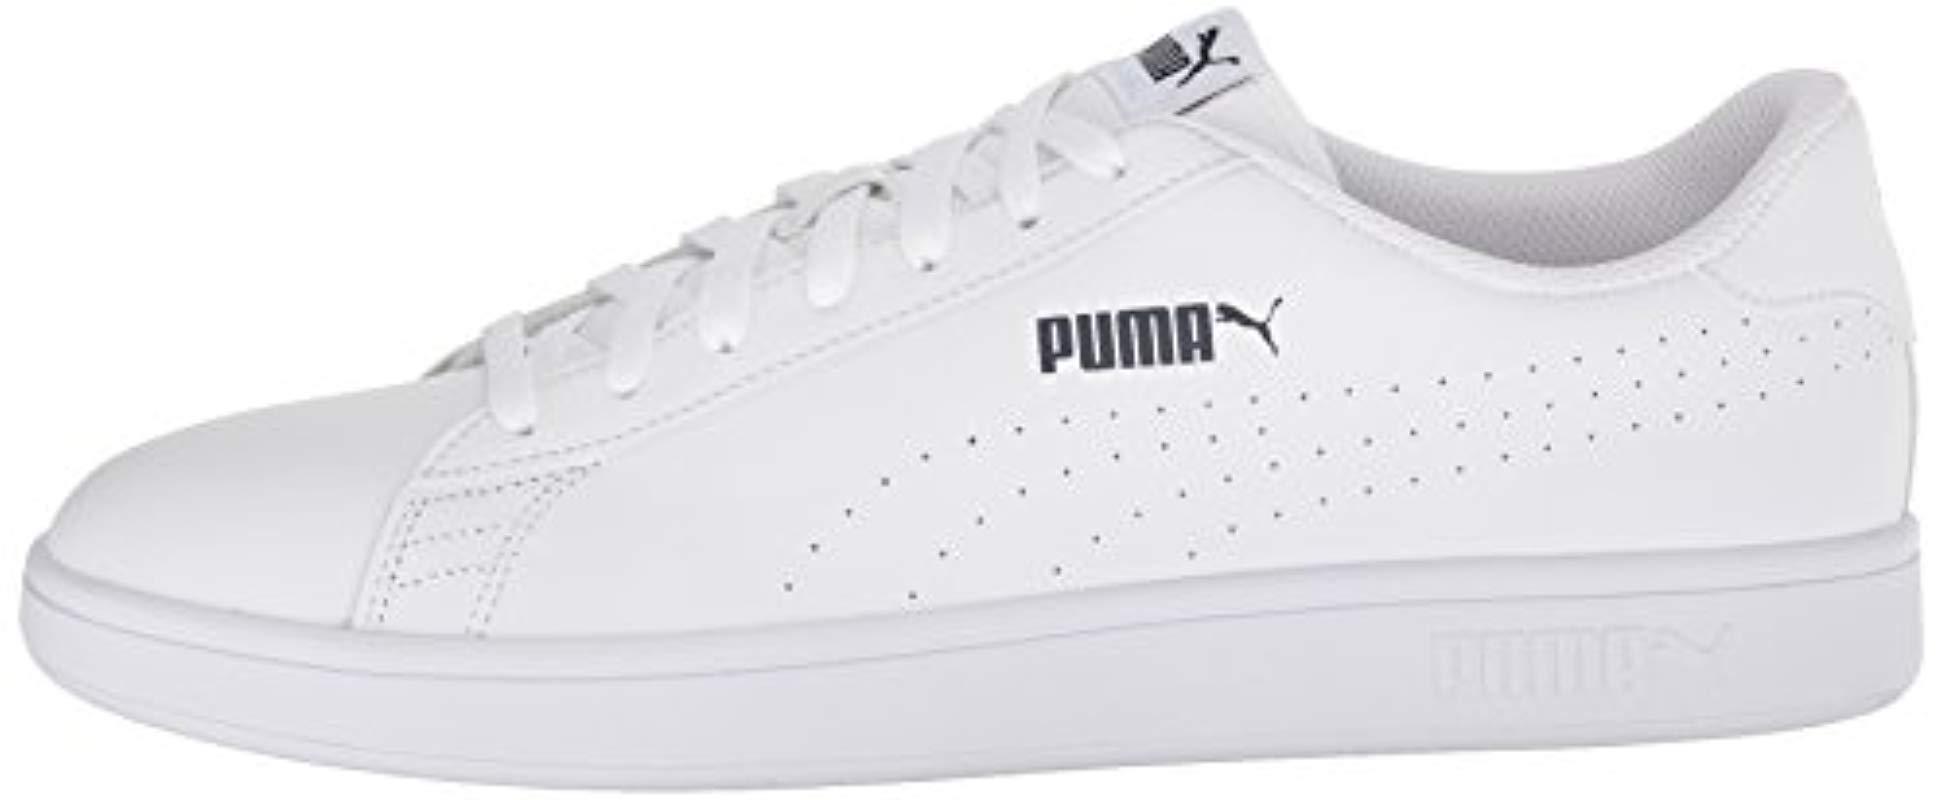 puma men's smash leather perf sneaker